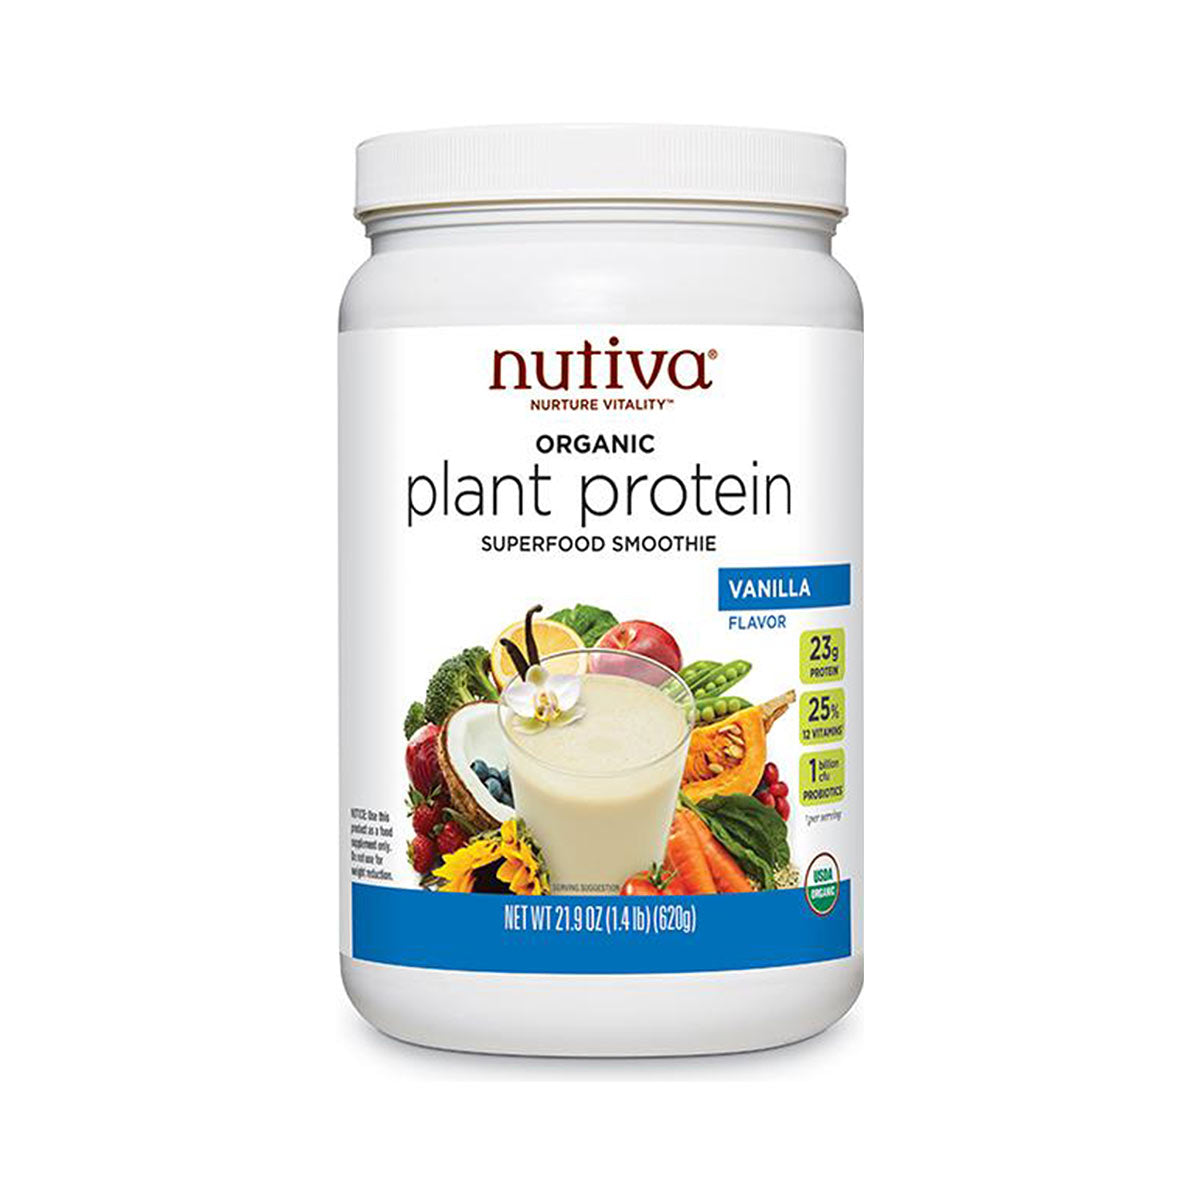 Nutiva Organic Plant Protein Superfood Smoothie Vanilla 620g